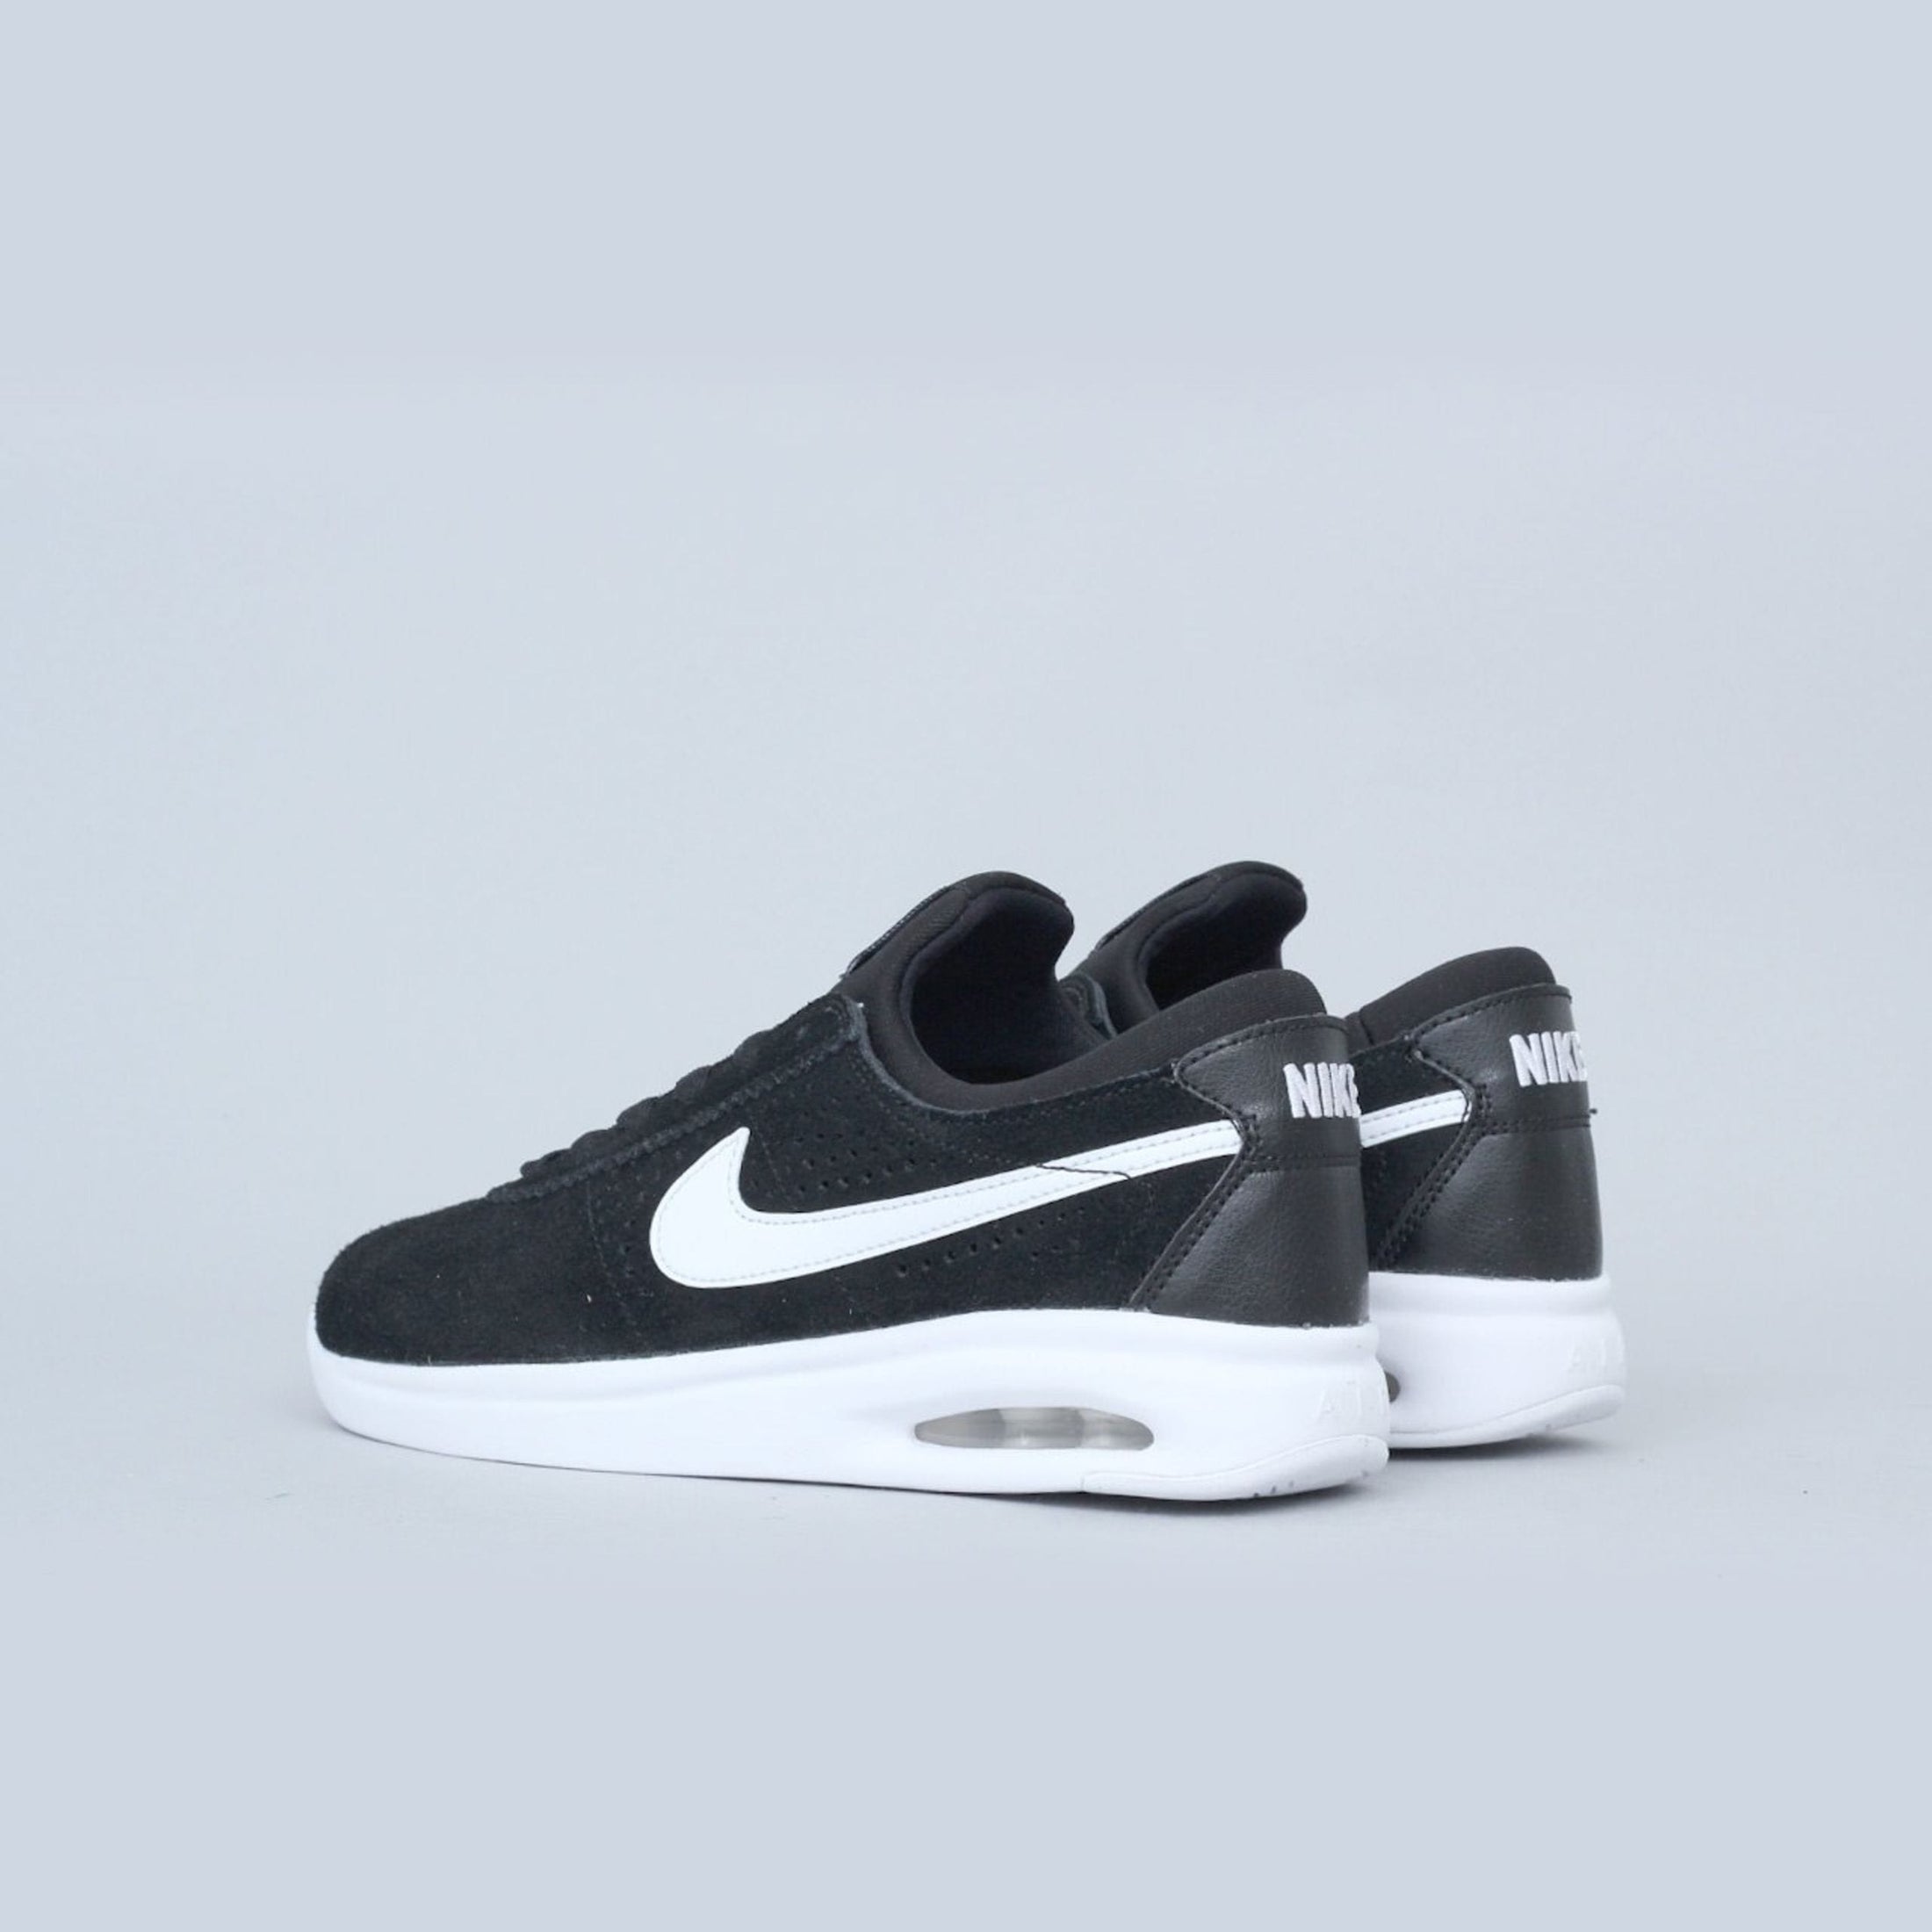 Nike SB Air Max Bruin Vapor (GS) Youth Shoes Black / White